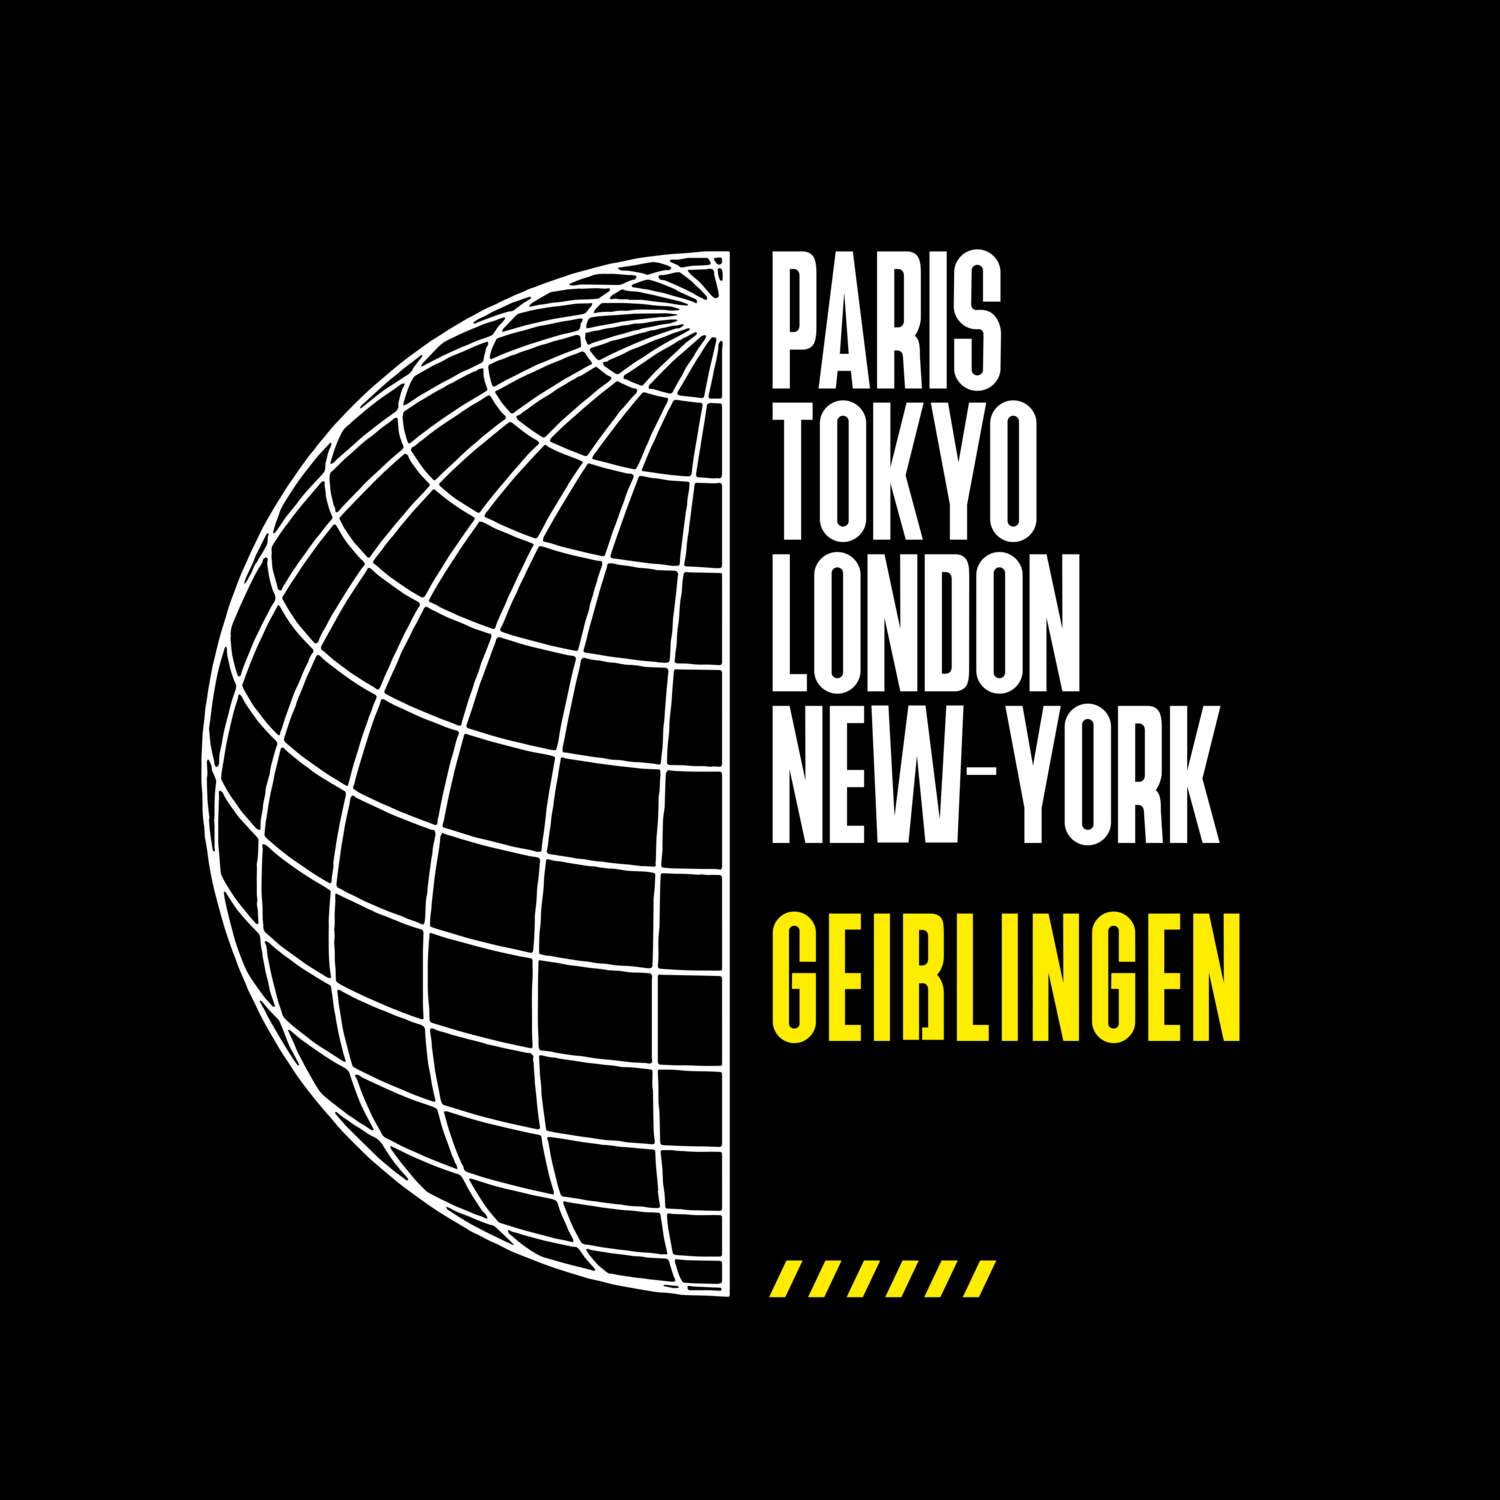 Geißlingen T-Shirt »Paris Tokyo London«